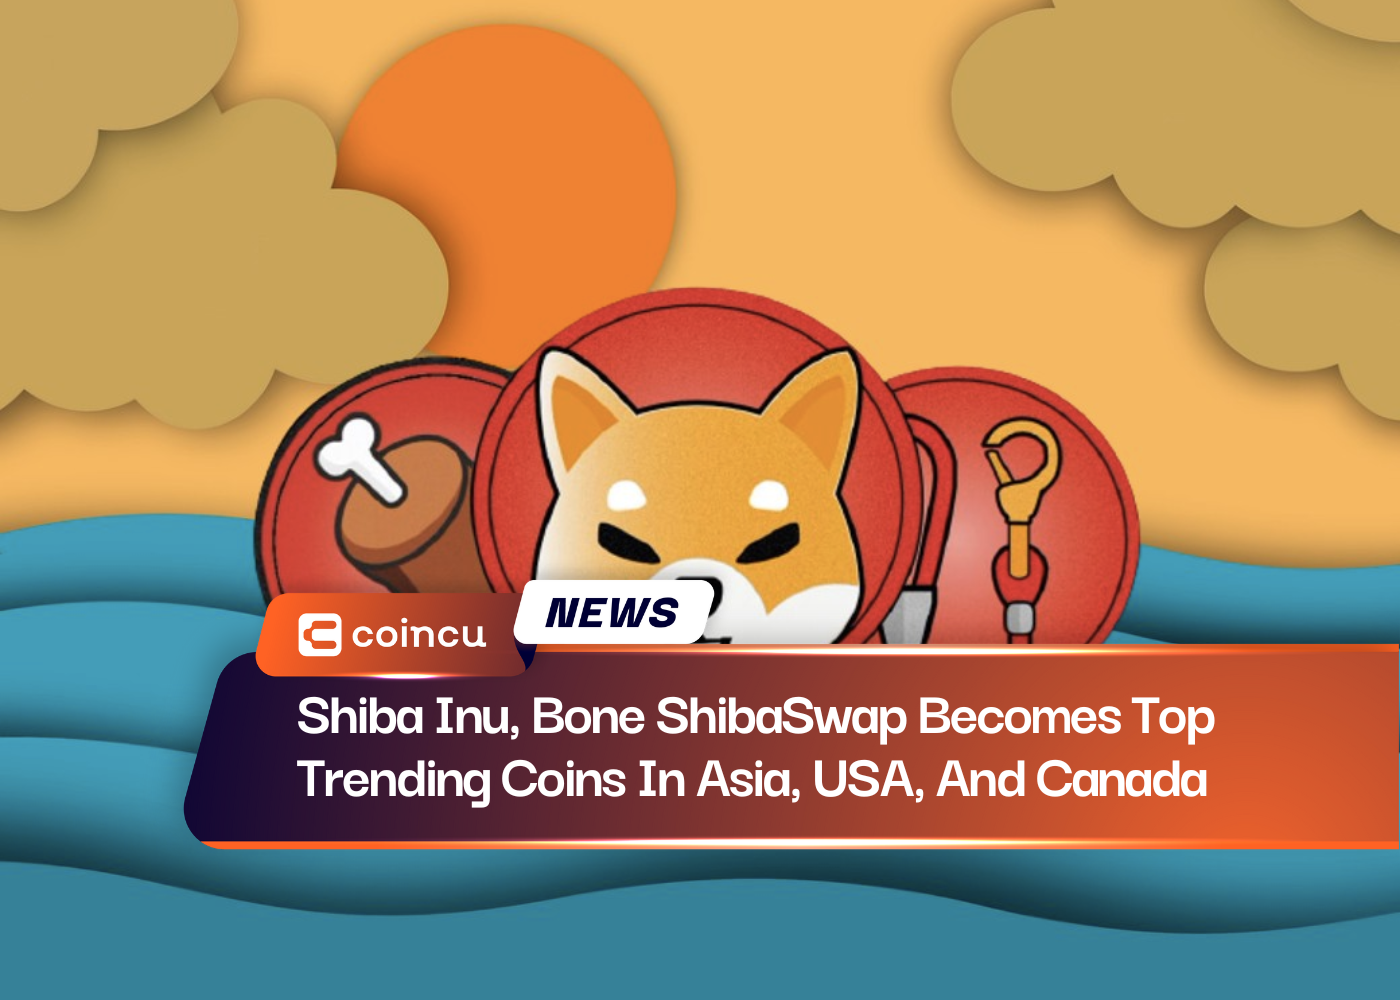 Shiba Inu, Bone ShibaSwap Becomes Top Trending Coins In Asia, USA, And Canada